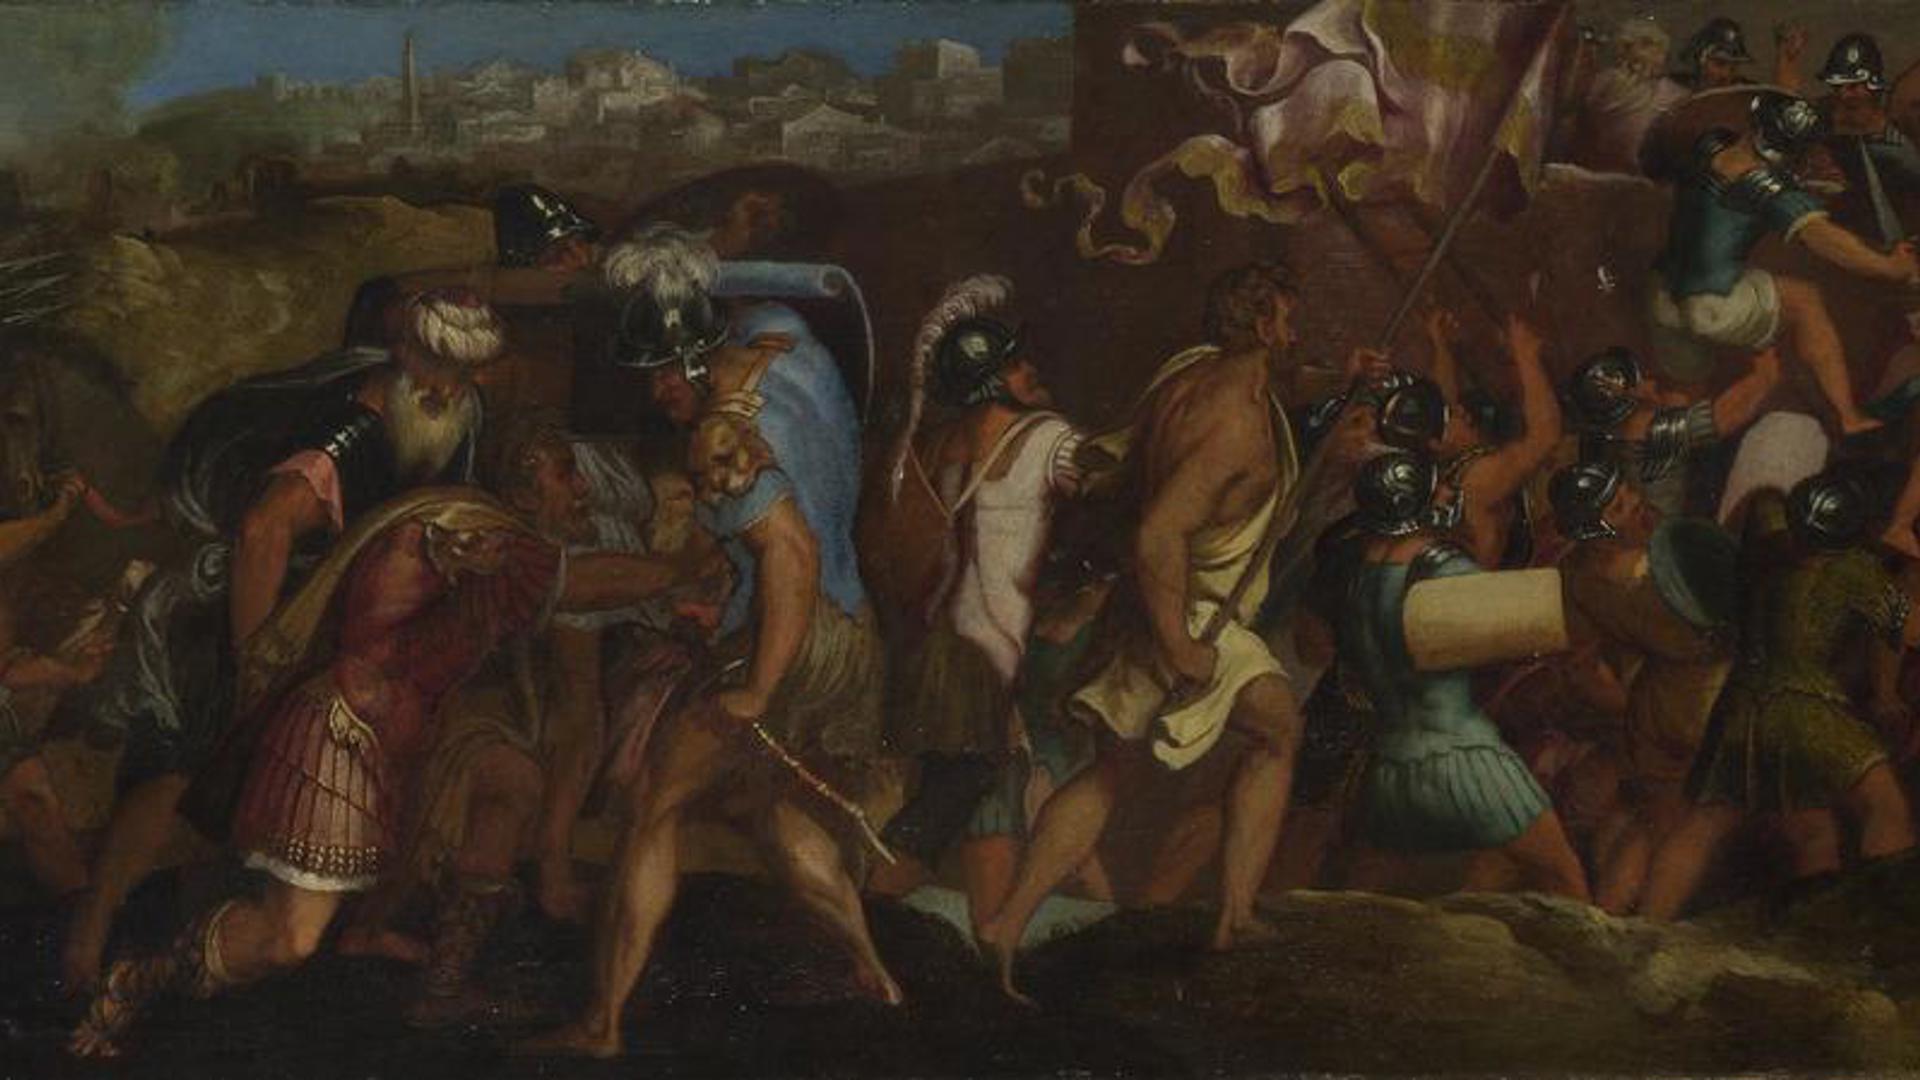 The Attack on Cartagena by Giulio Licinio